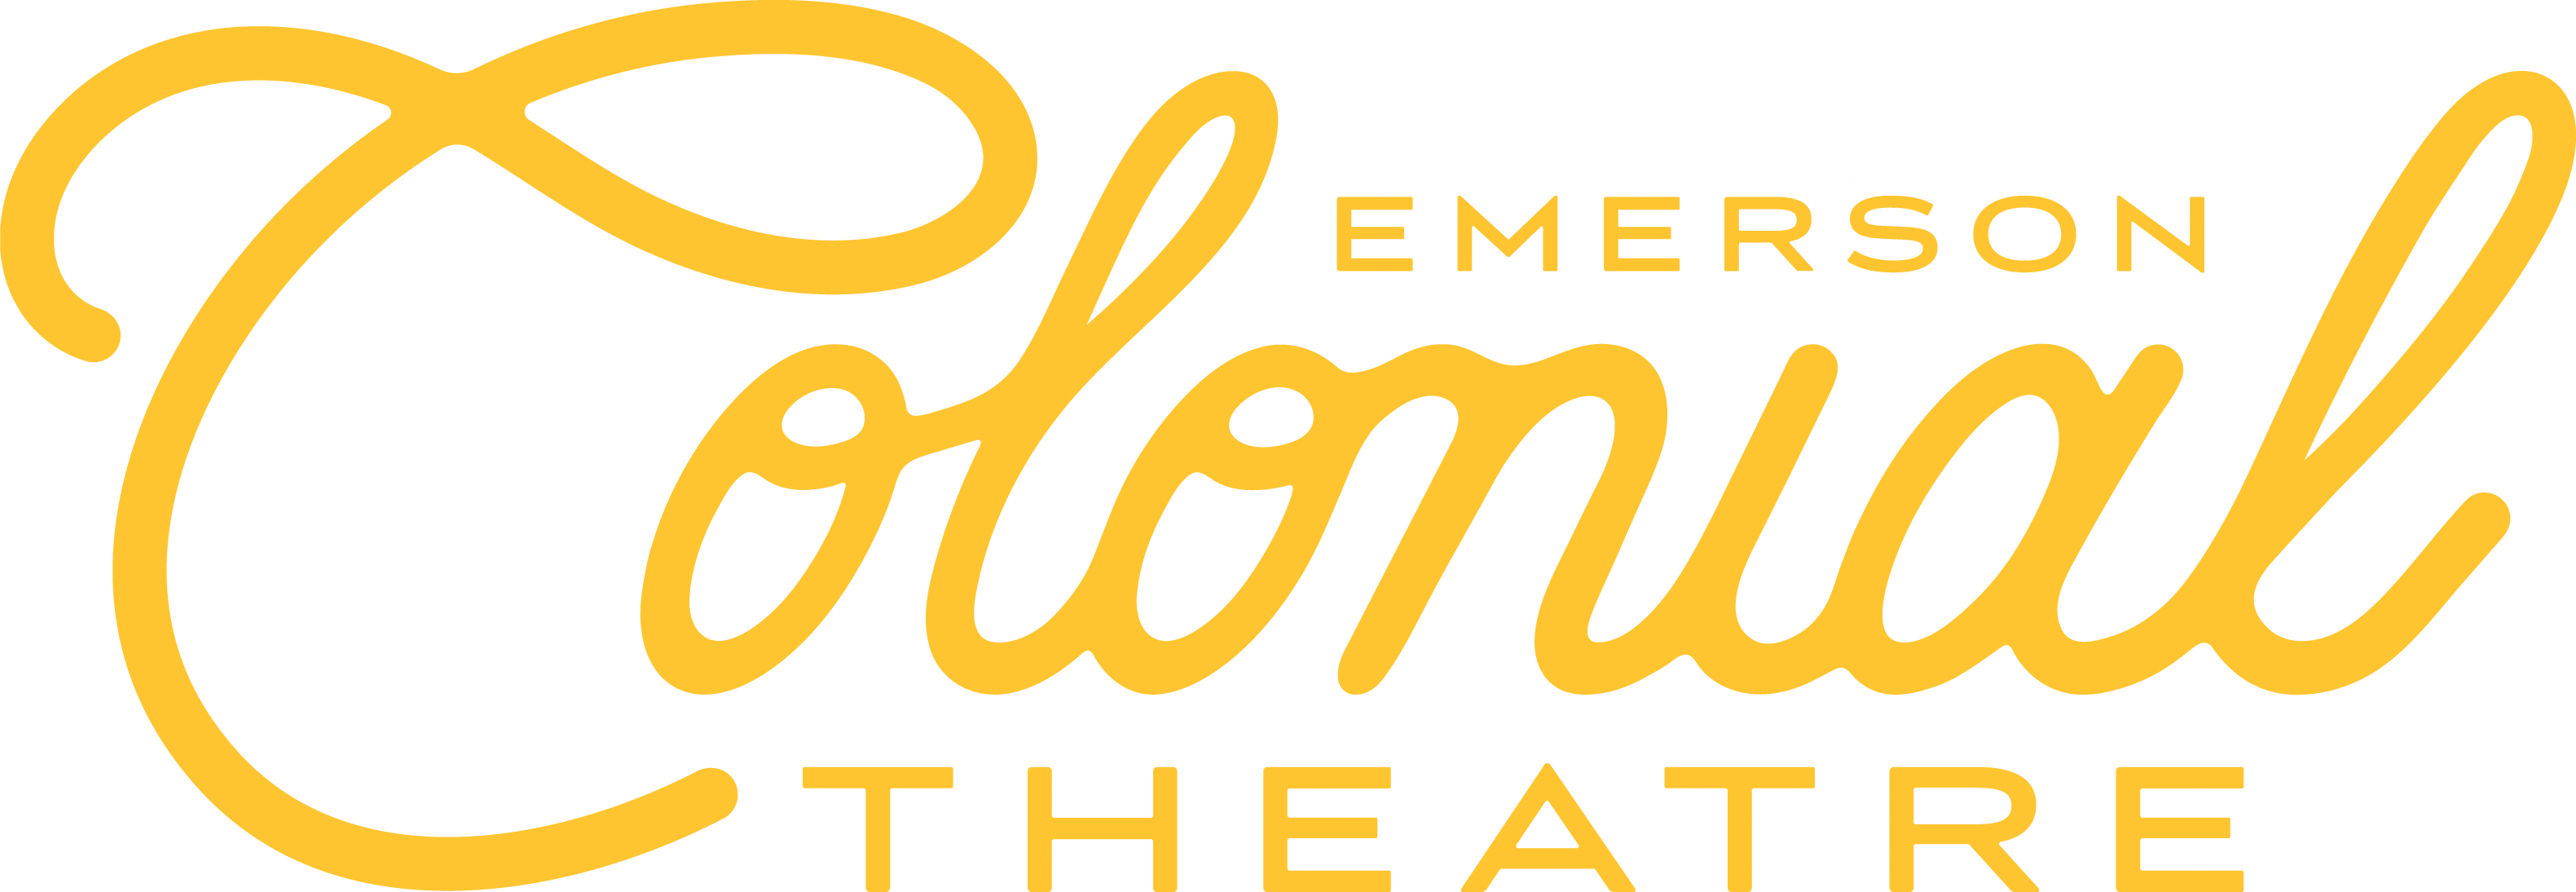 Emerson Colonial Theatre sales 